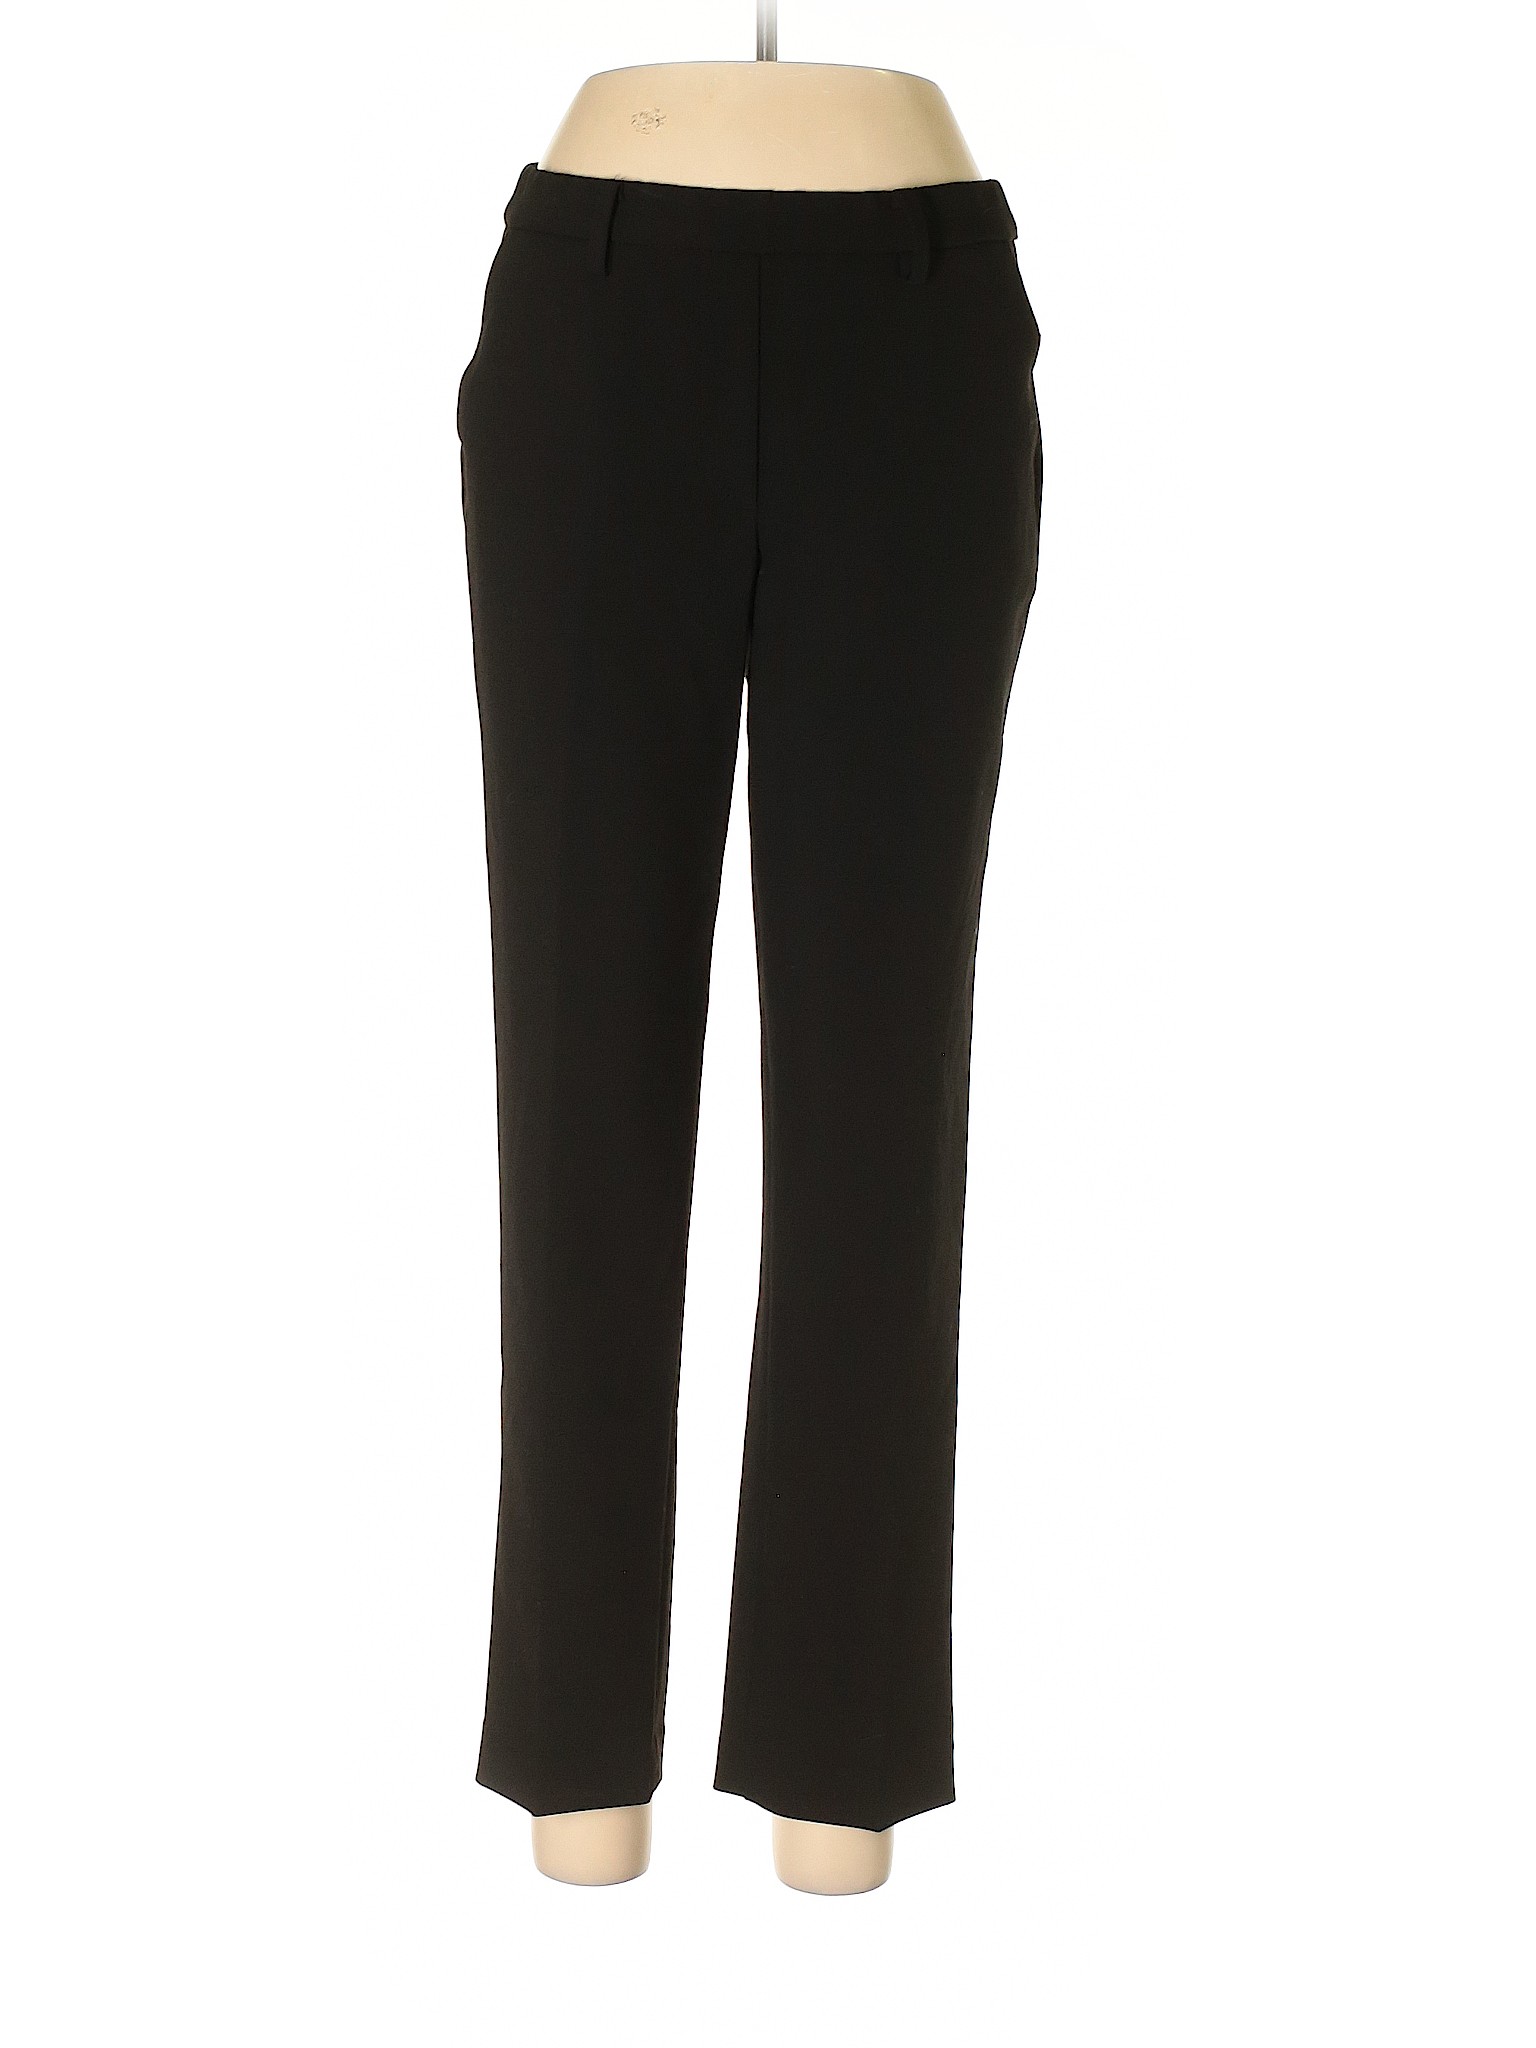 Talbots Women Black Dress Pants 6 | eBay